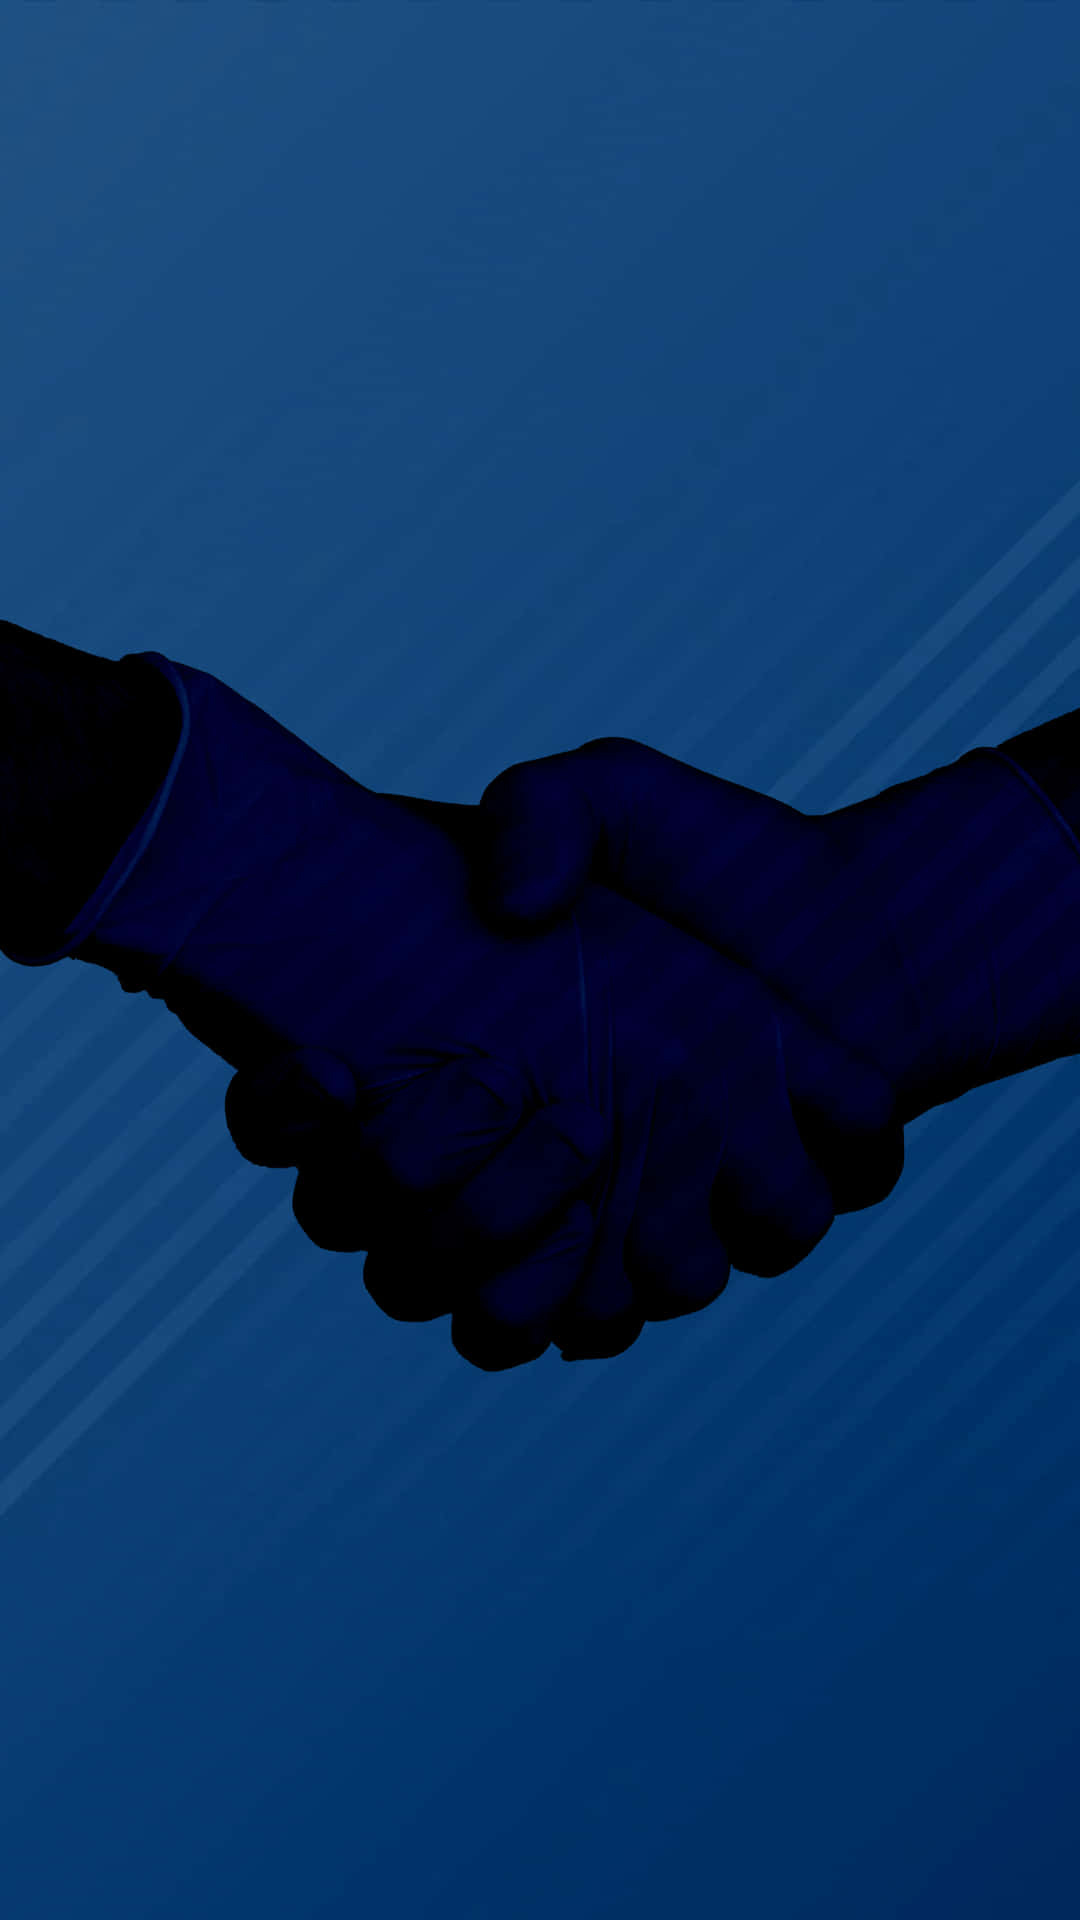 Blue Handshake Silhouette Background